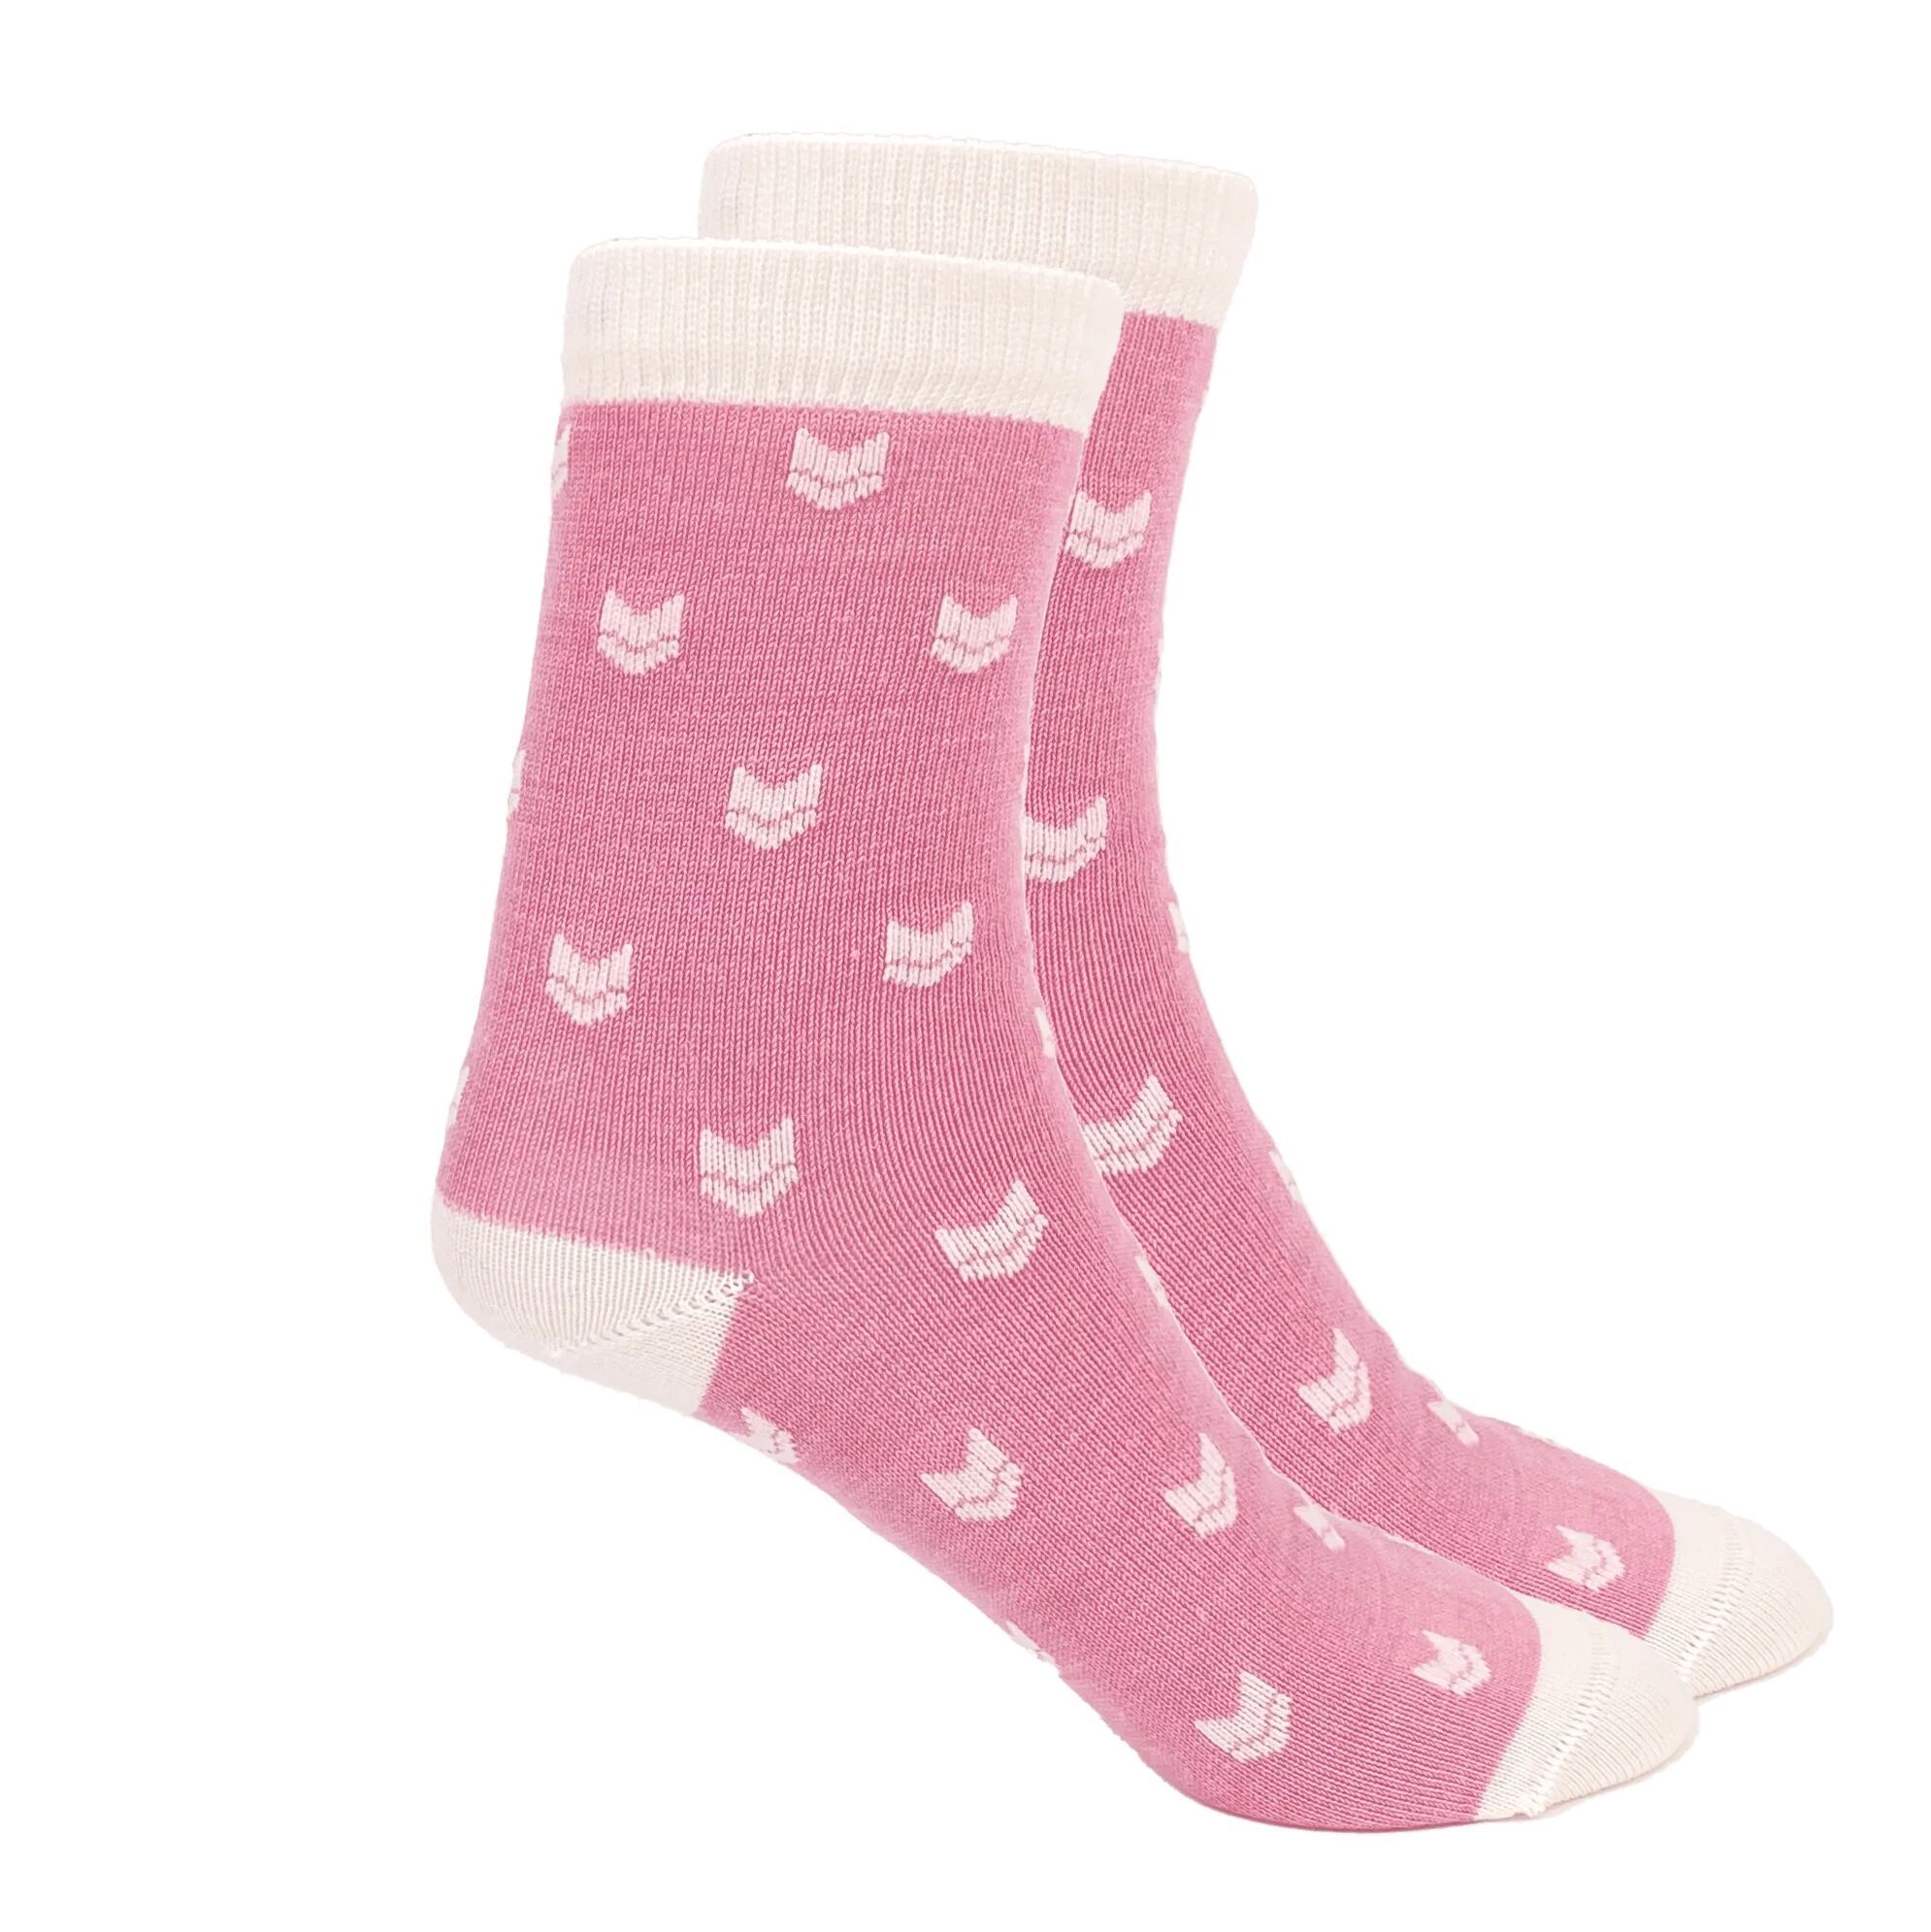 VAI-KØ Logo Socks - Merino Wool, Hazy Pink / 43-46